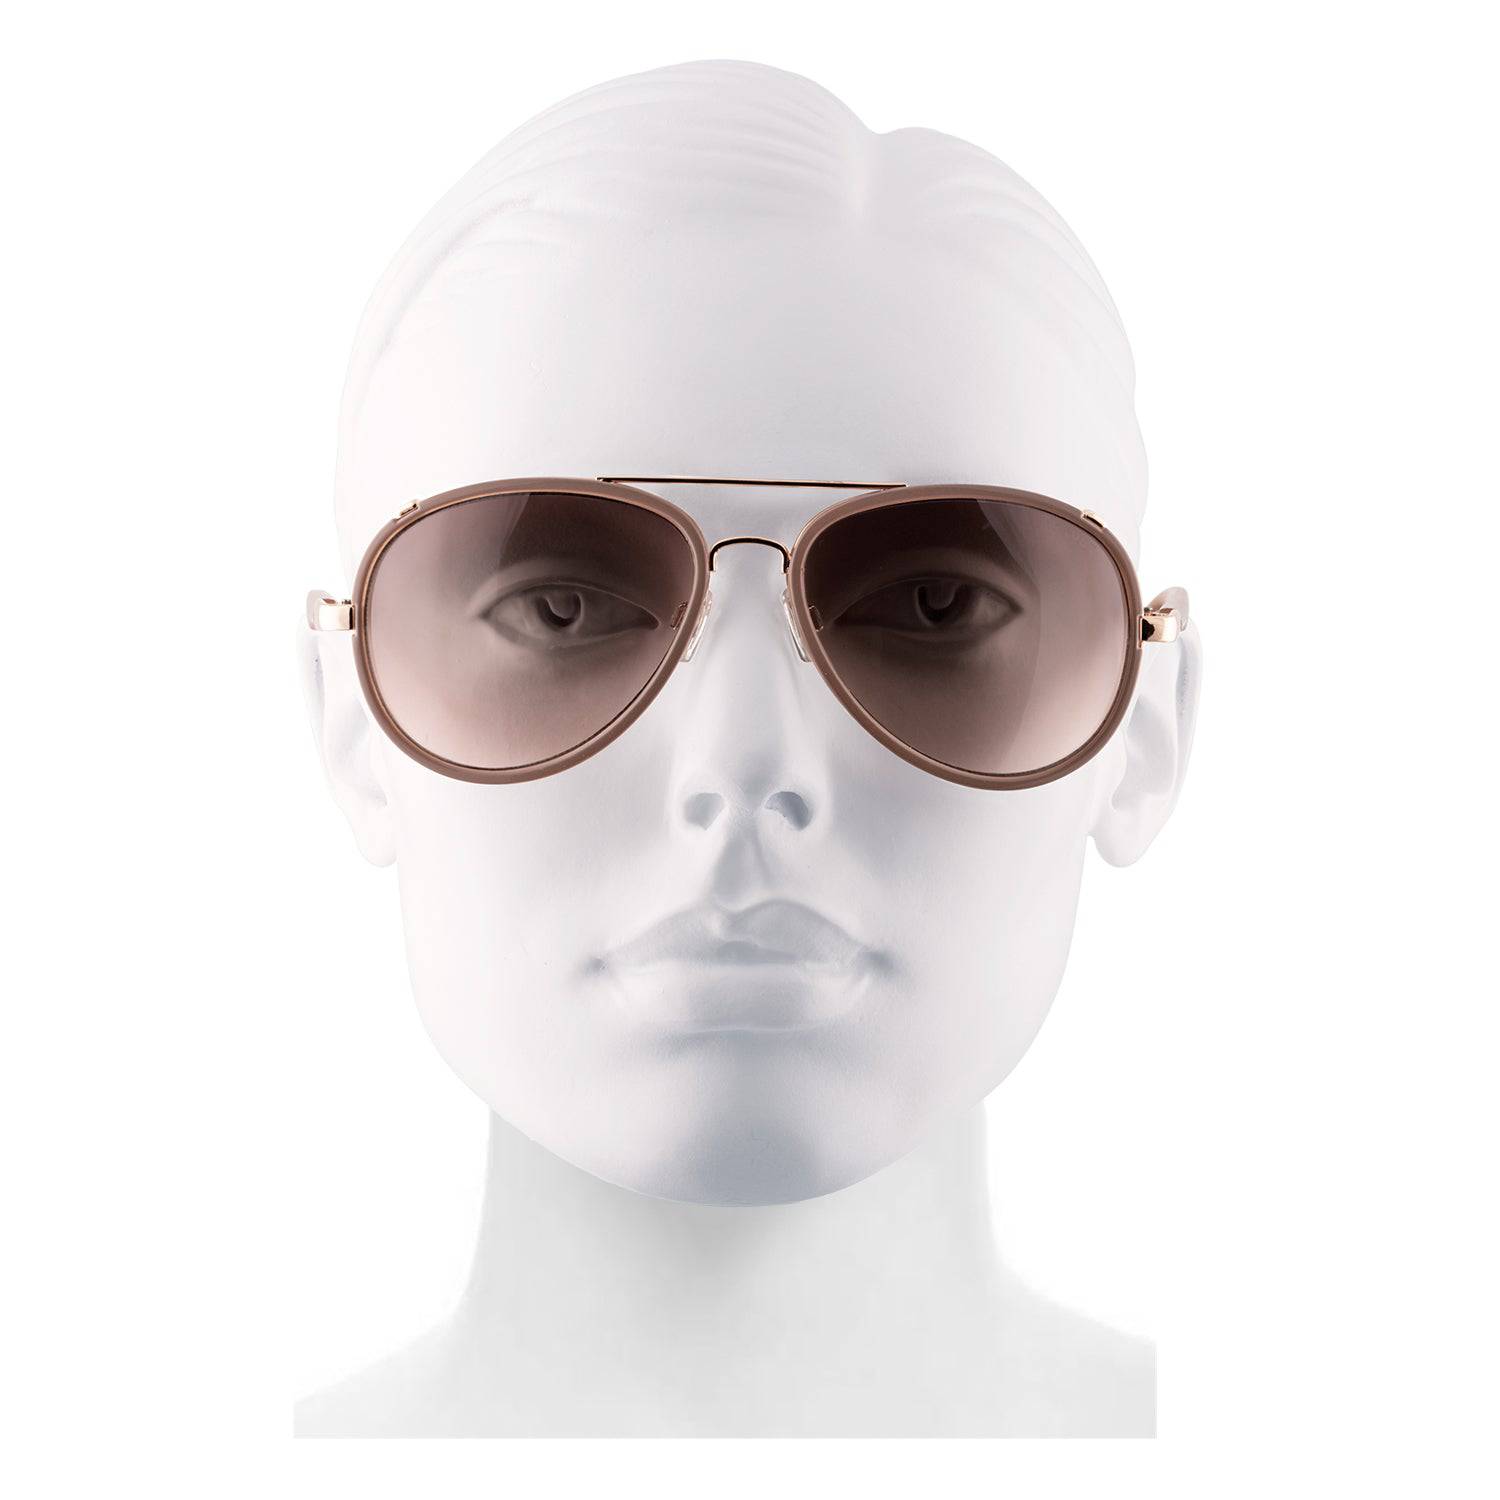 Velvet Eyewear Official | Women's Sunglasses, Eyewear, Goggles & more